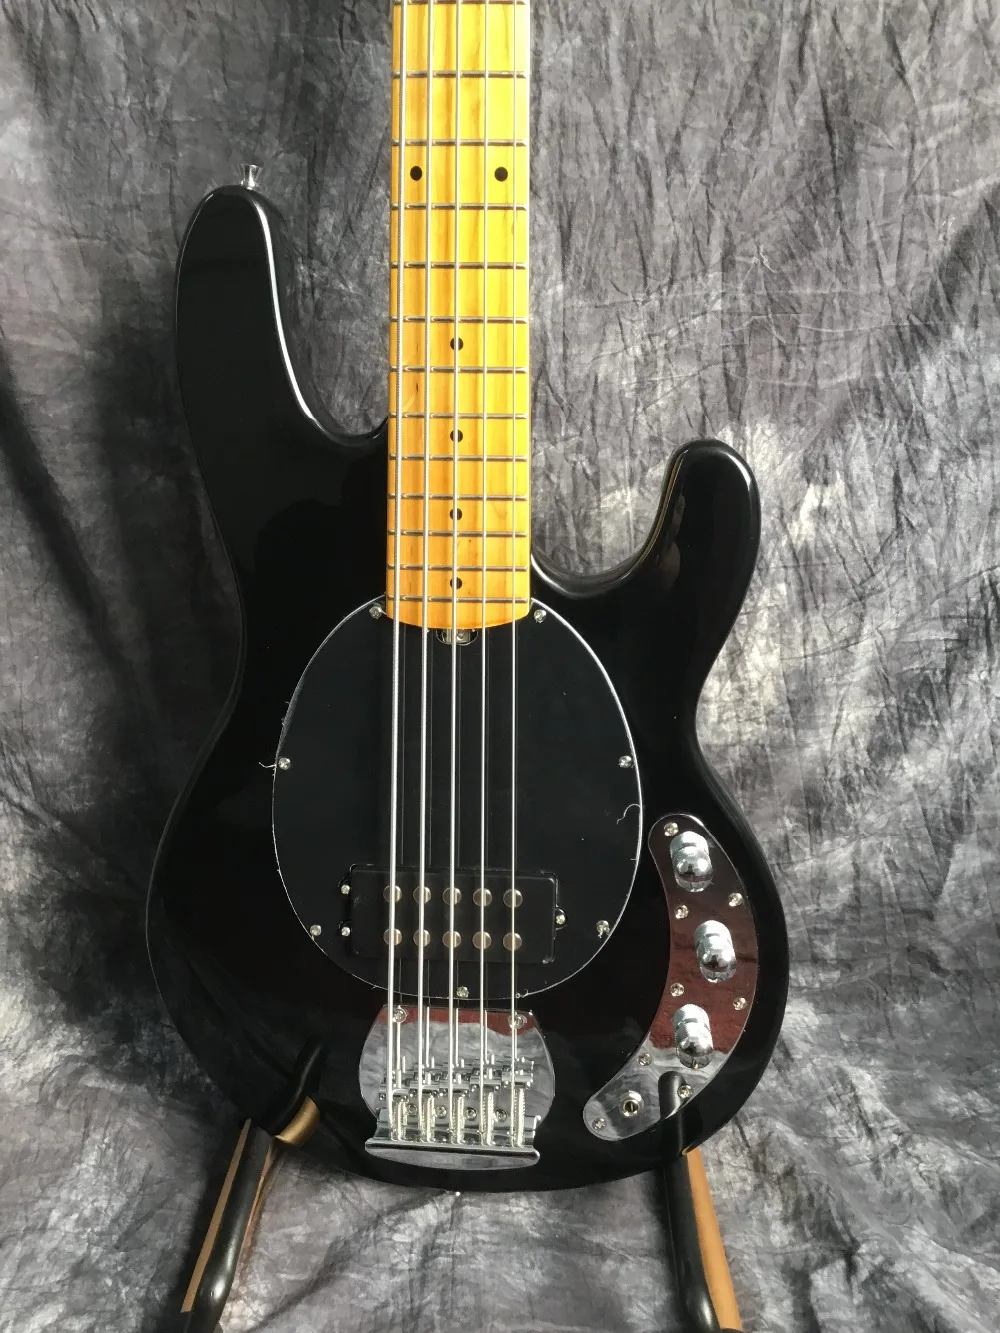 Top Selling Black Rickenback Bass Guitar 4 String Music Electric Bass